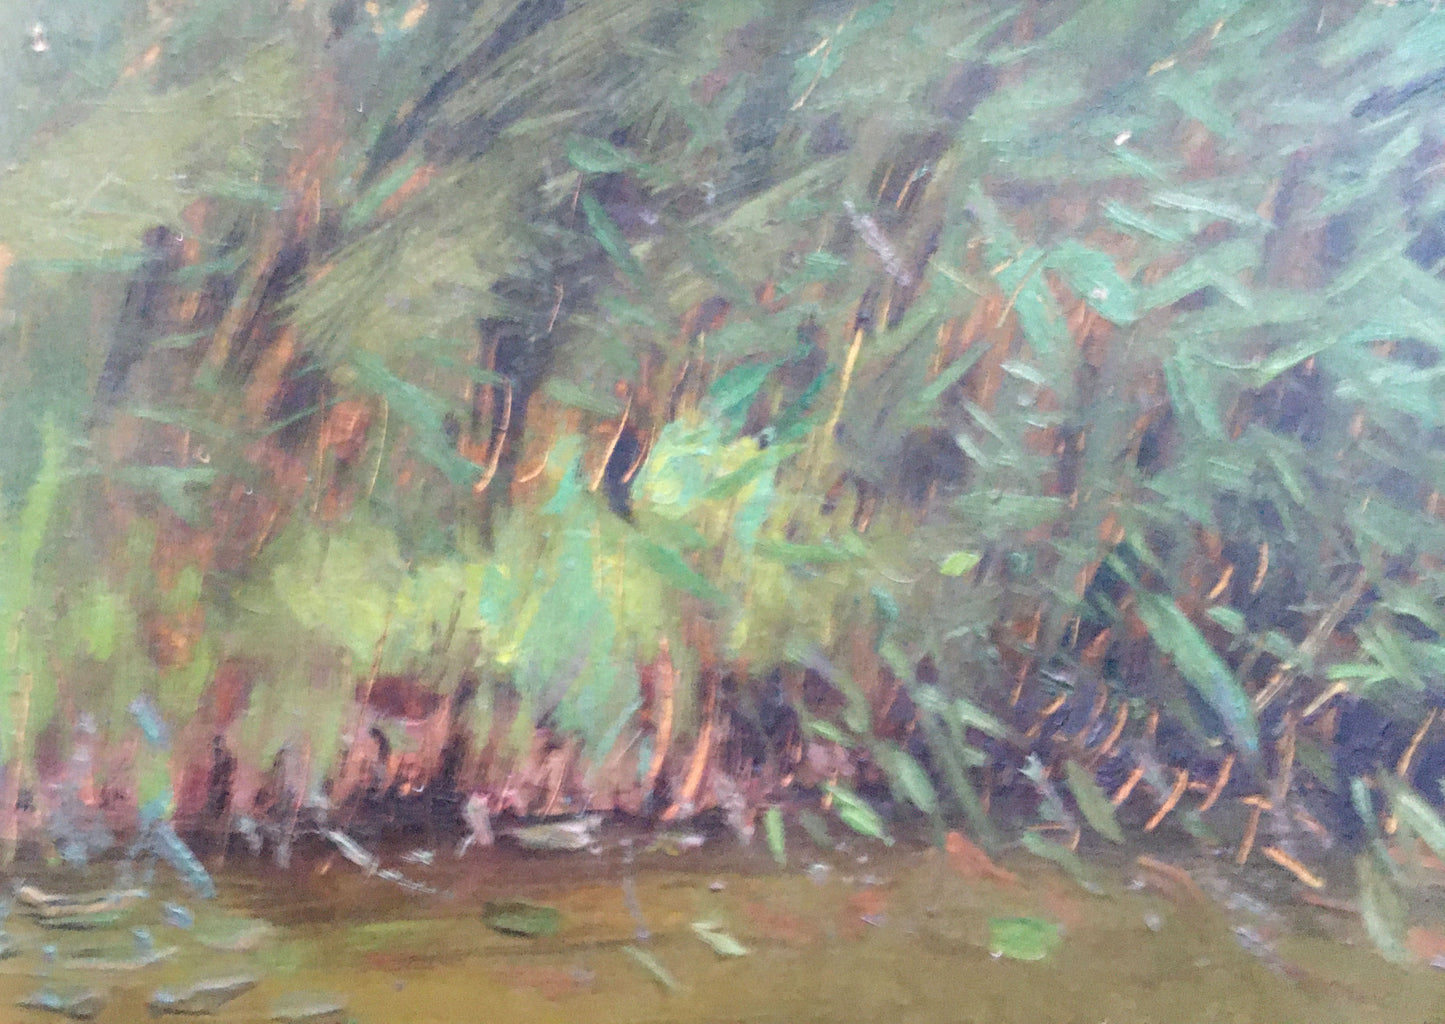 Ivan Kirillovich Tsyupka's oil artwork portrays the mysterious allure of a swamp